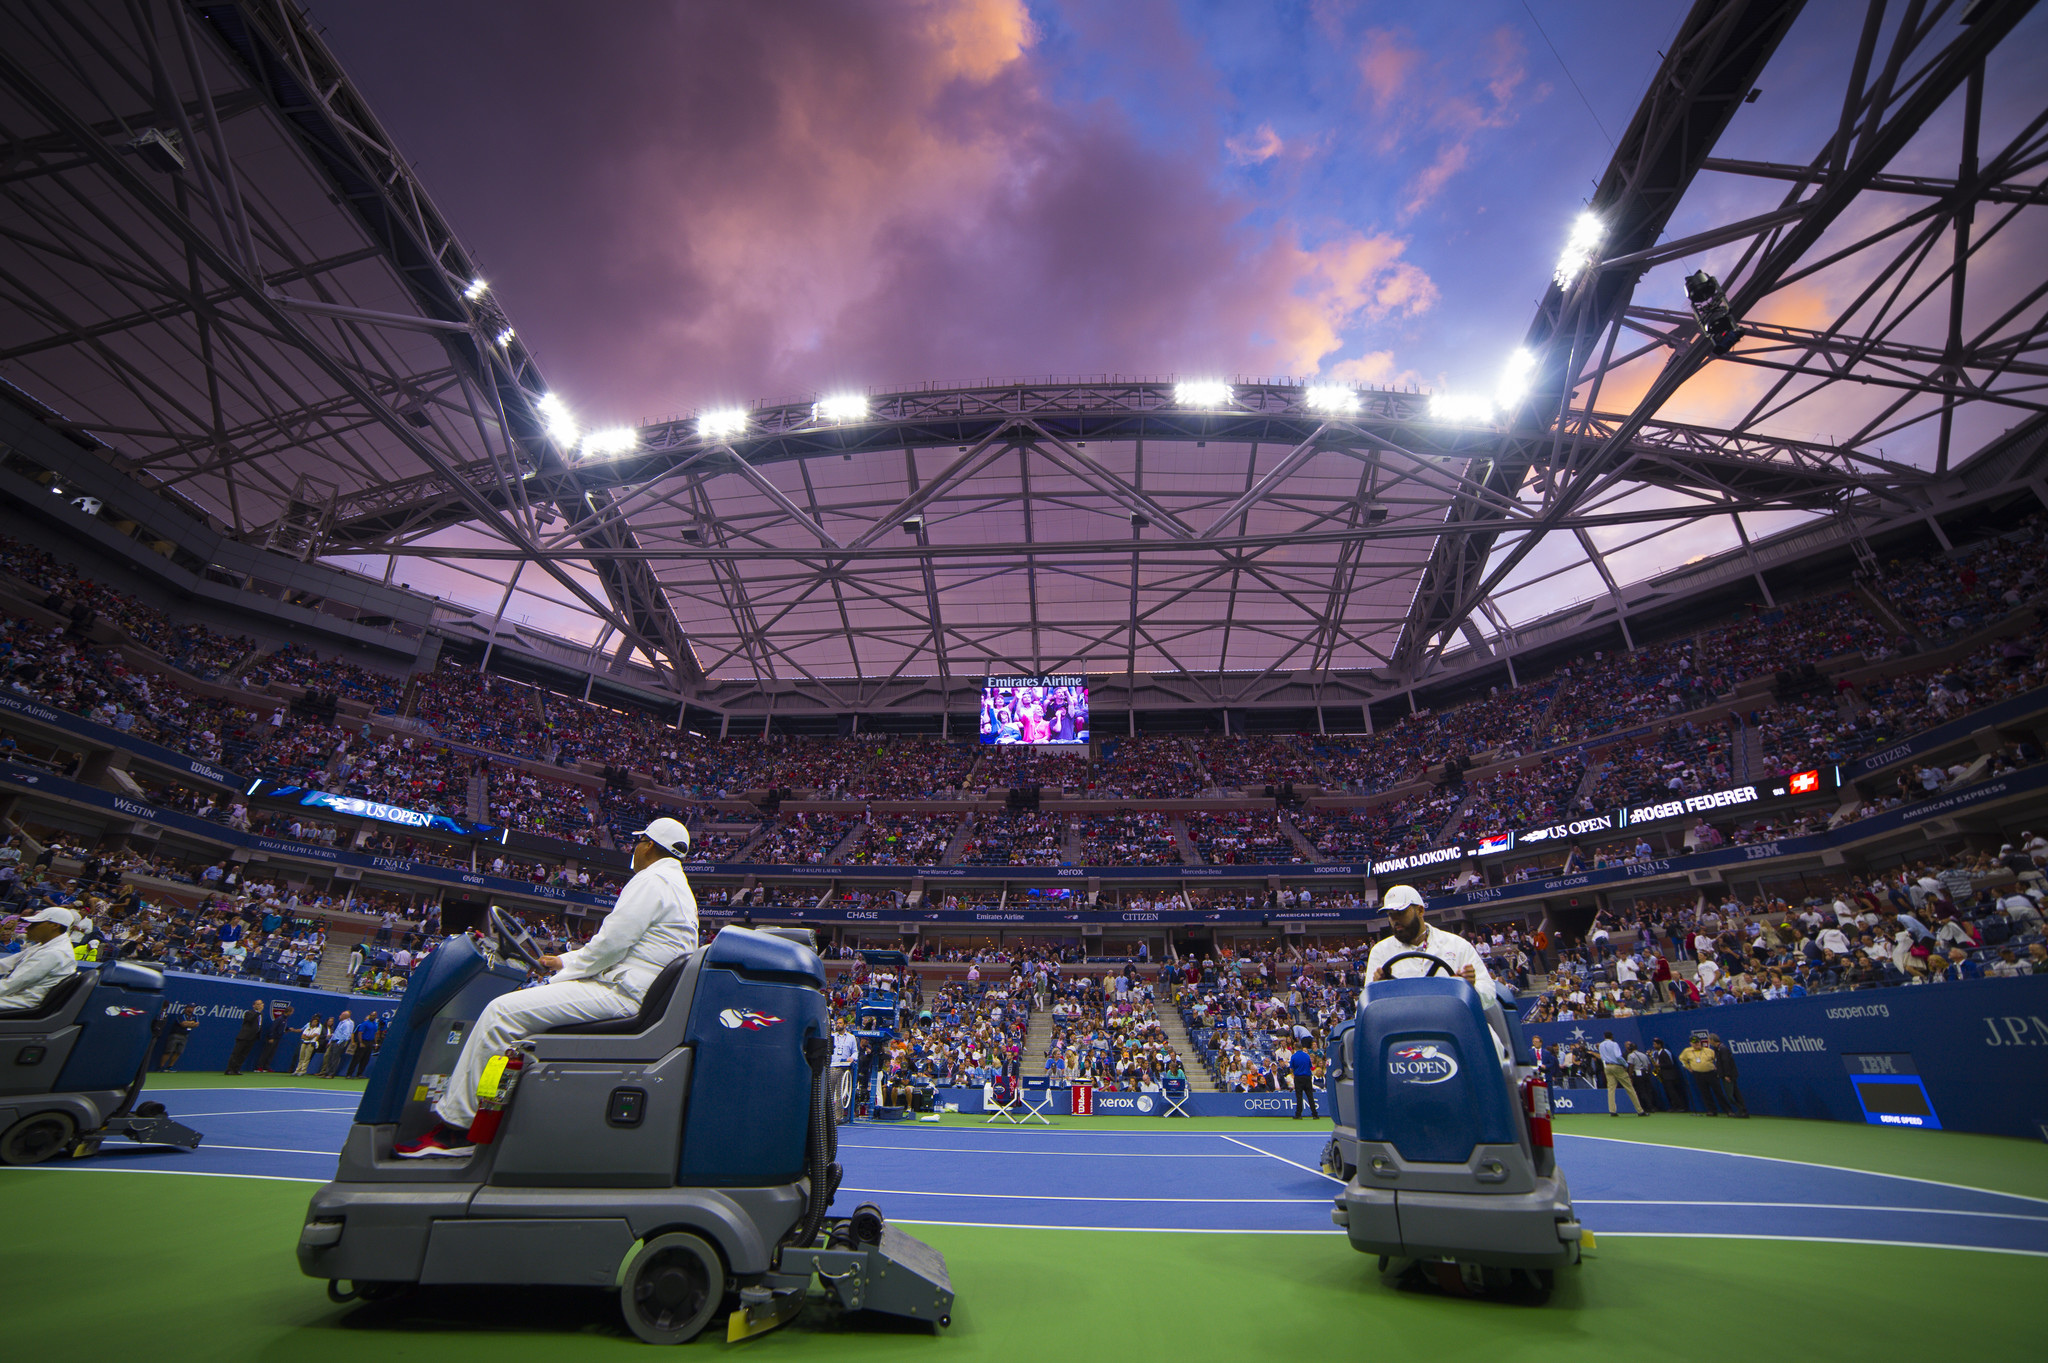 U.S. Open will still continue as scheduled, even after Wimbledon cancelation